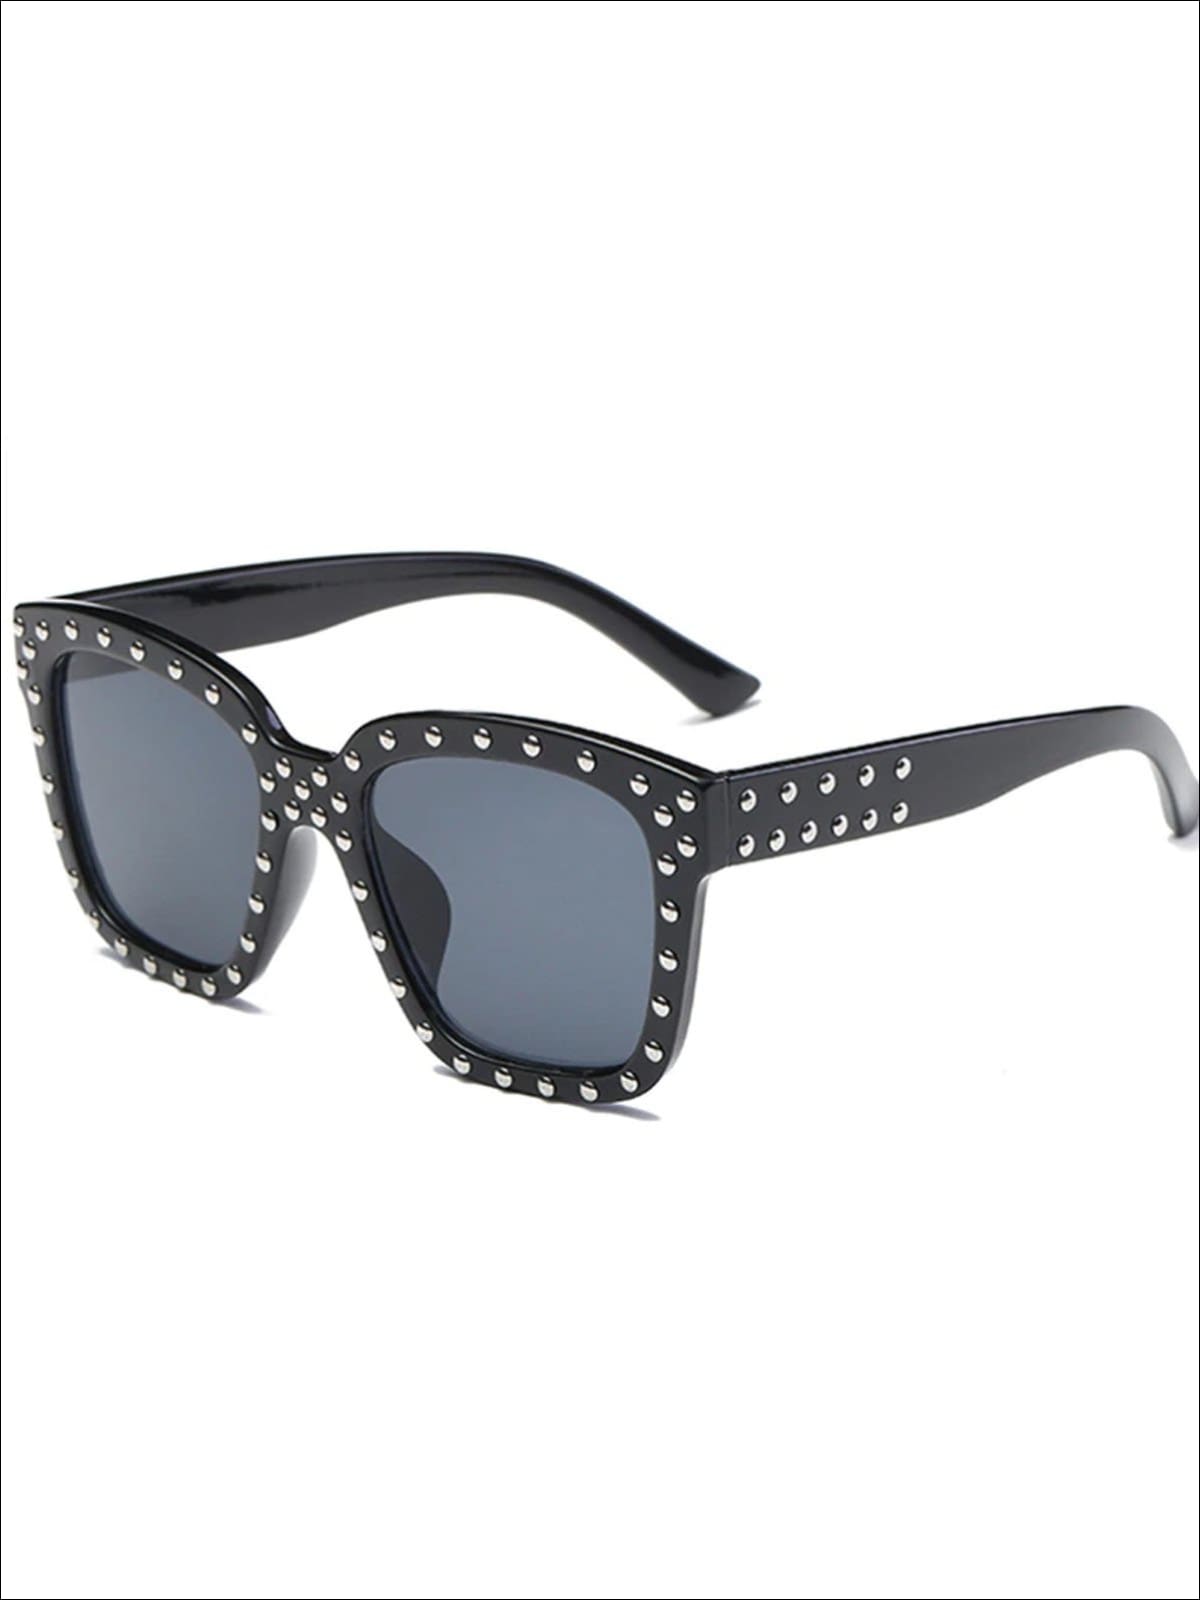 Girls Studded Square Frame Sunglasses - Black - Girls Accessories